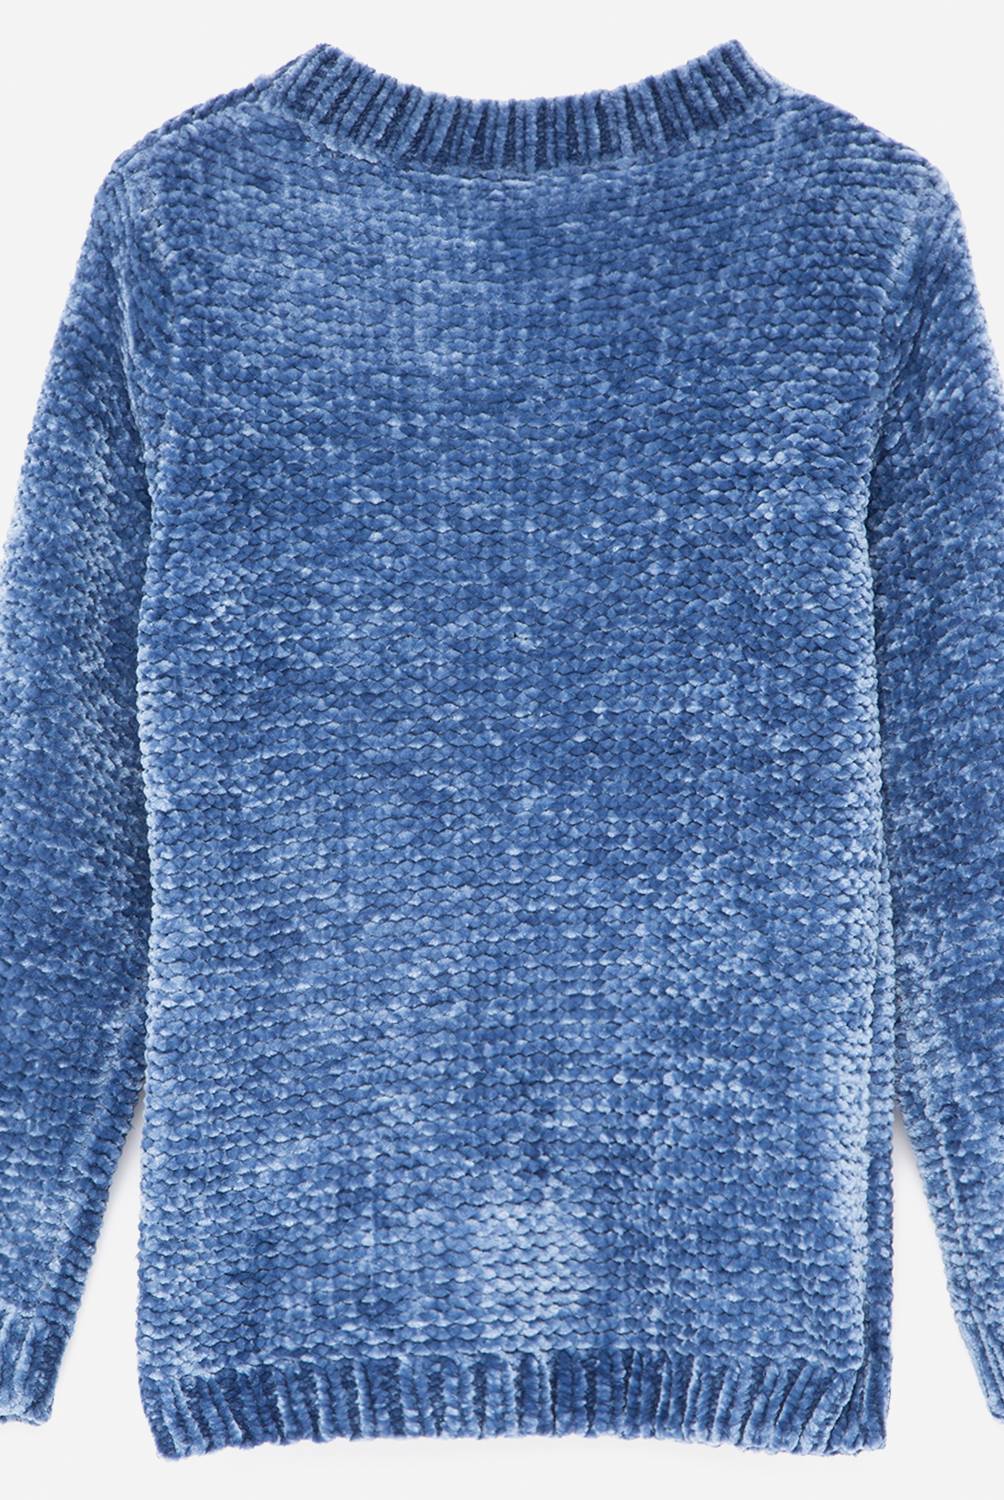 YAMP - Sweater Chenille